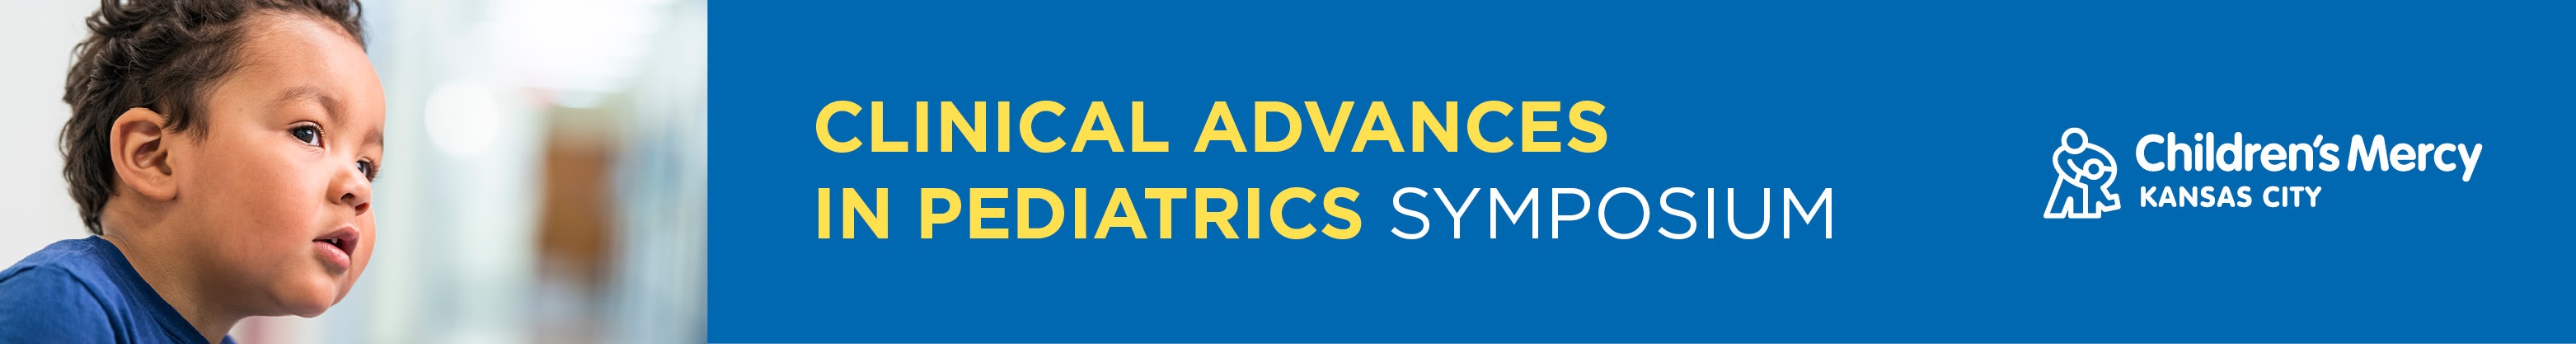 56th Annual Clinical Advances in Pediatrics Symposium Banner